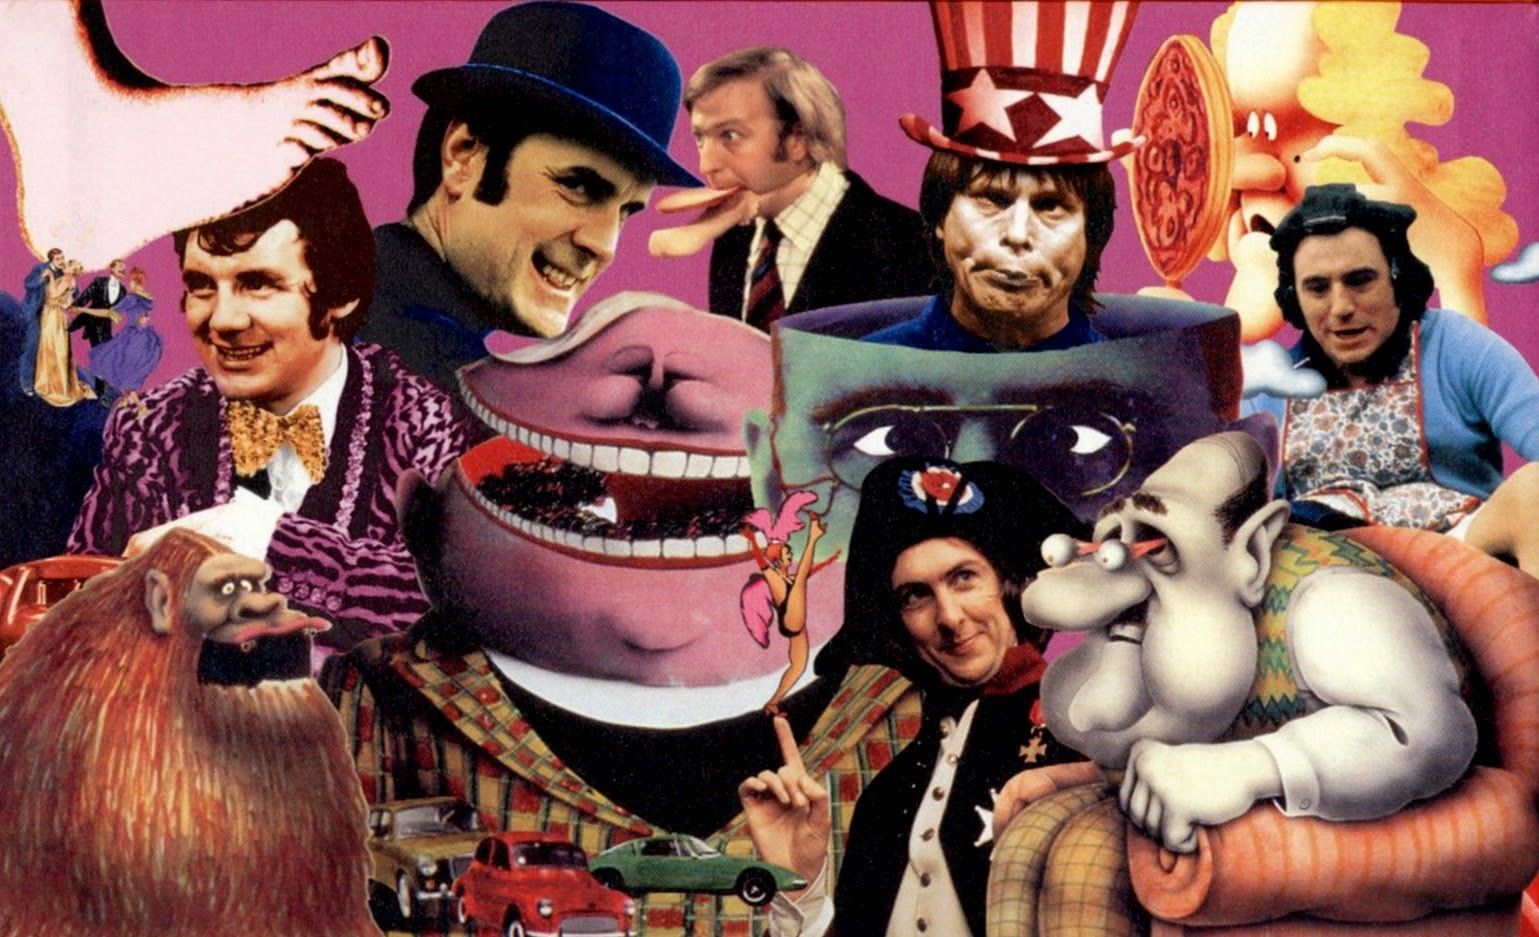 Watch: How Monty Python Created Modern Comedy